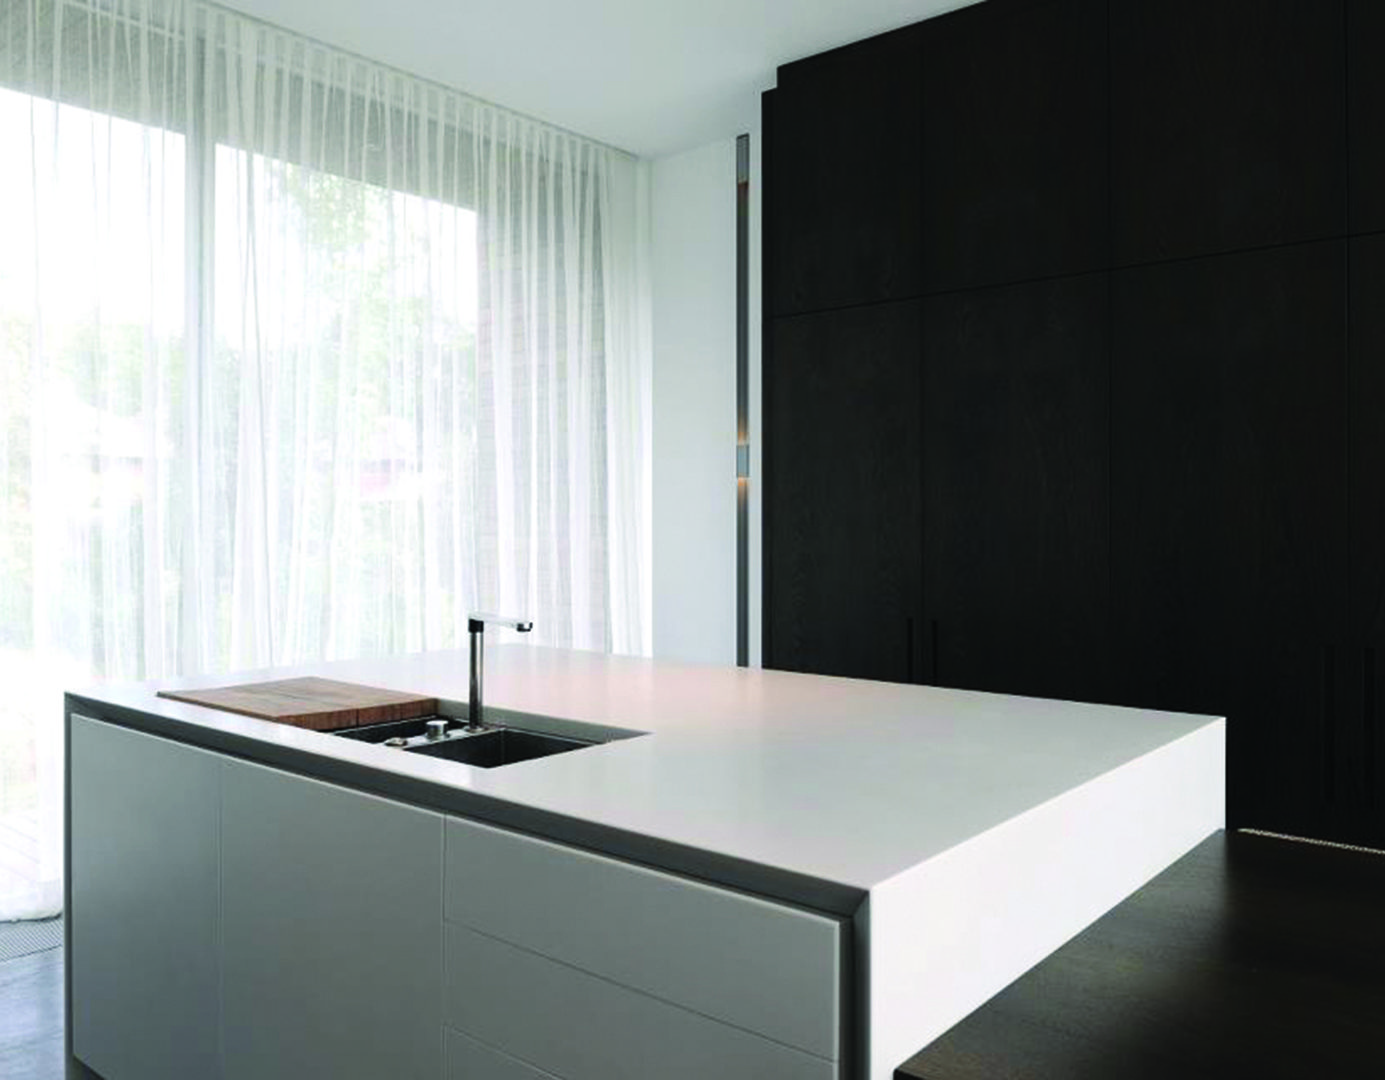 Strato_design_Non Plus Ultra_bespoke kitchen project in Belgium_stratocolor white_mat stainless steel_dark Oak wood_12